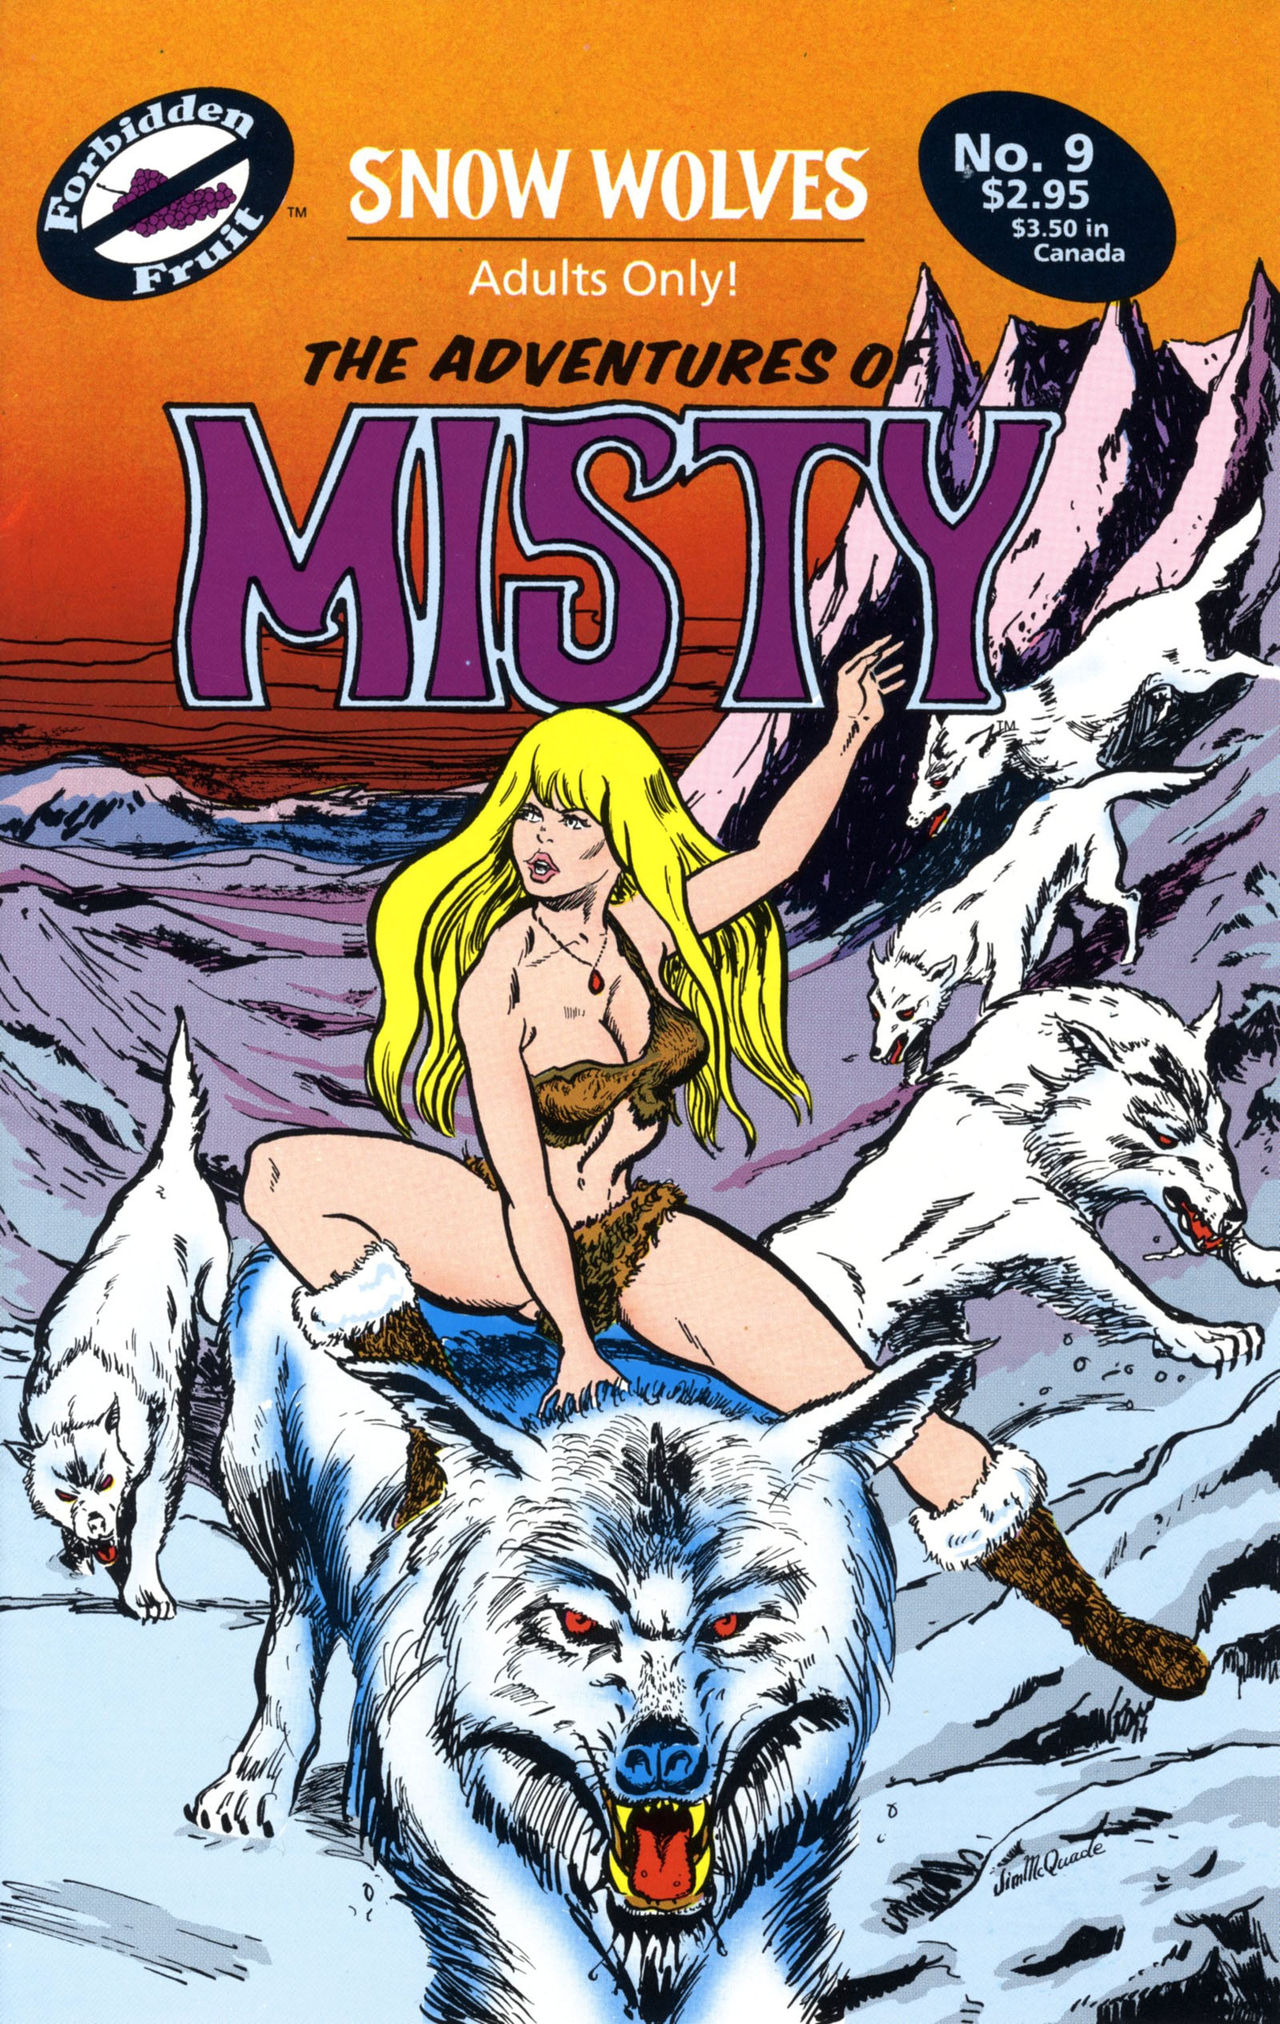 [James Mcquade] The Adventures of Misty #9 